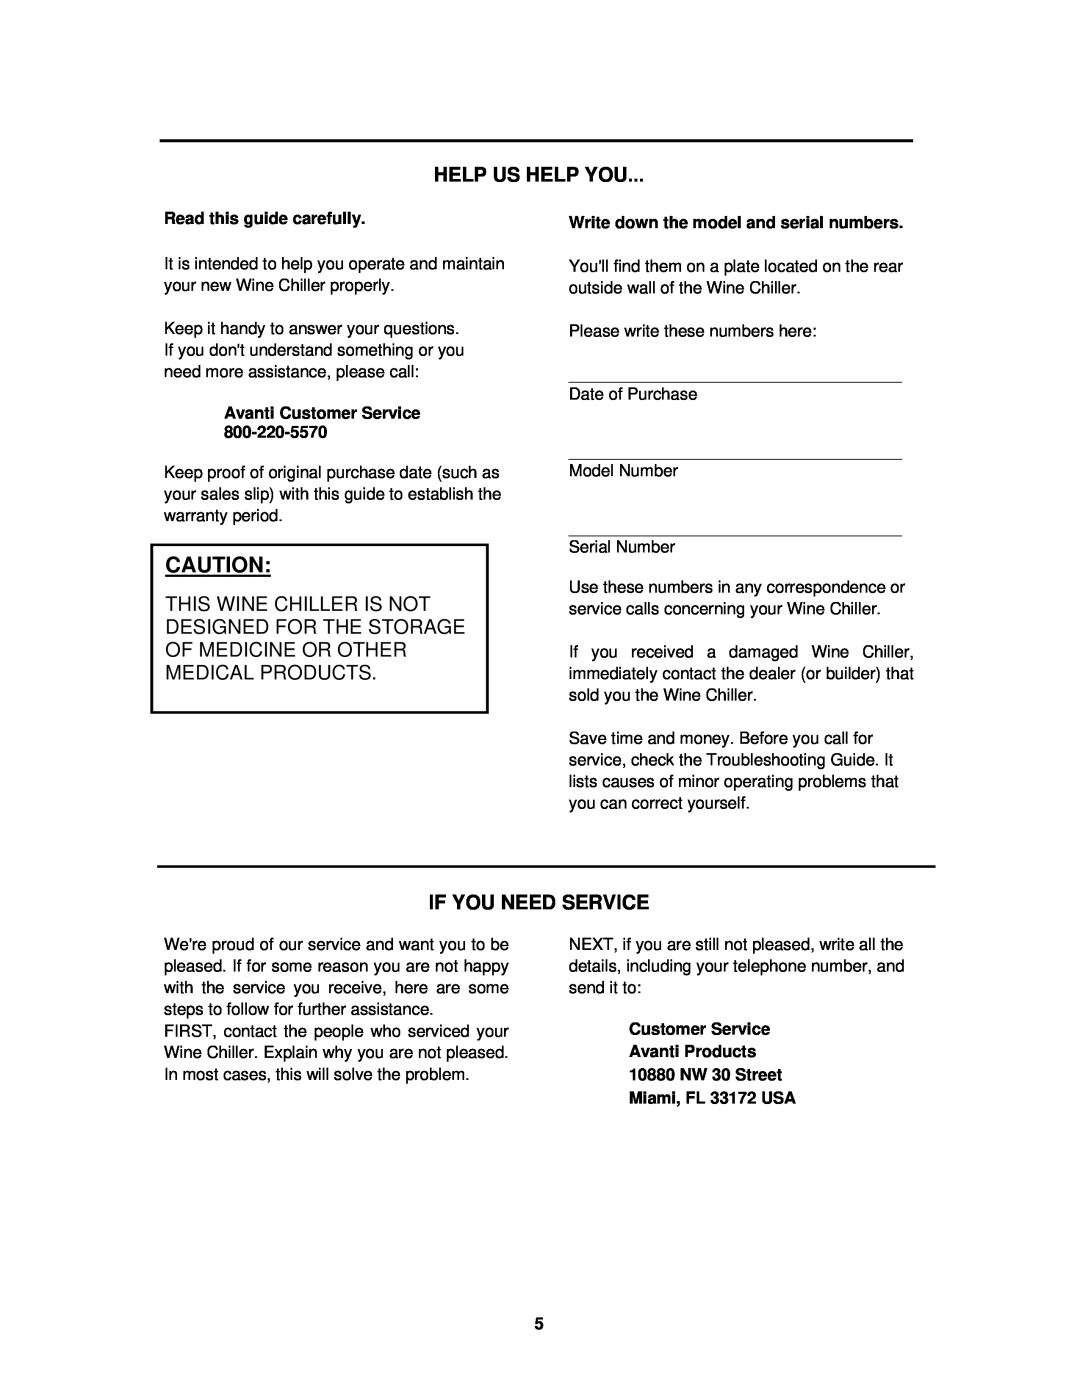 Avanti EWC1601B manual Read this guide carefully, Avanti Customer Service, Write down the model and serial numbers 